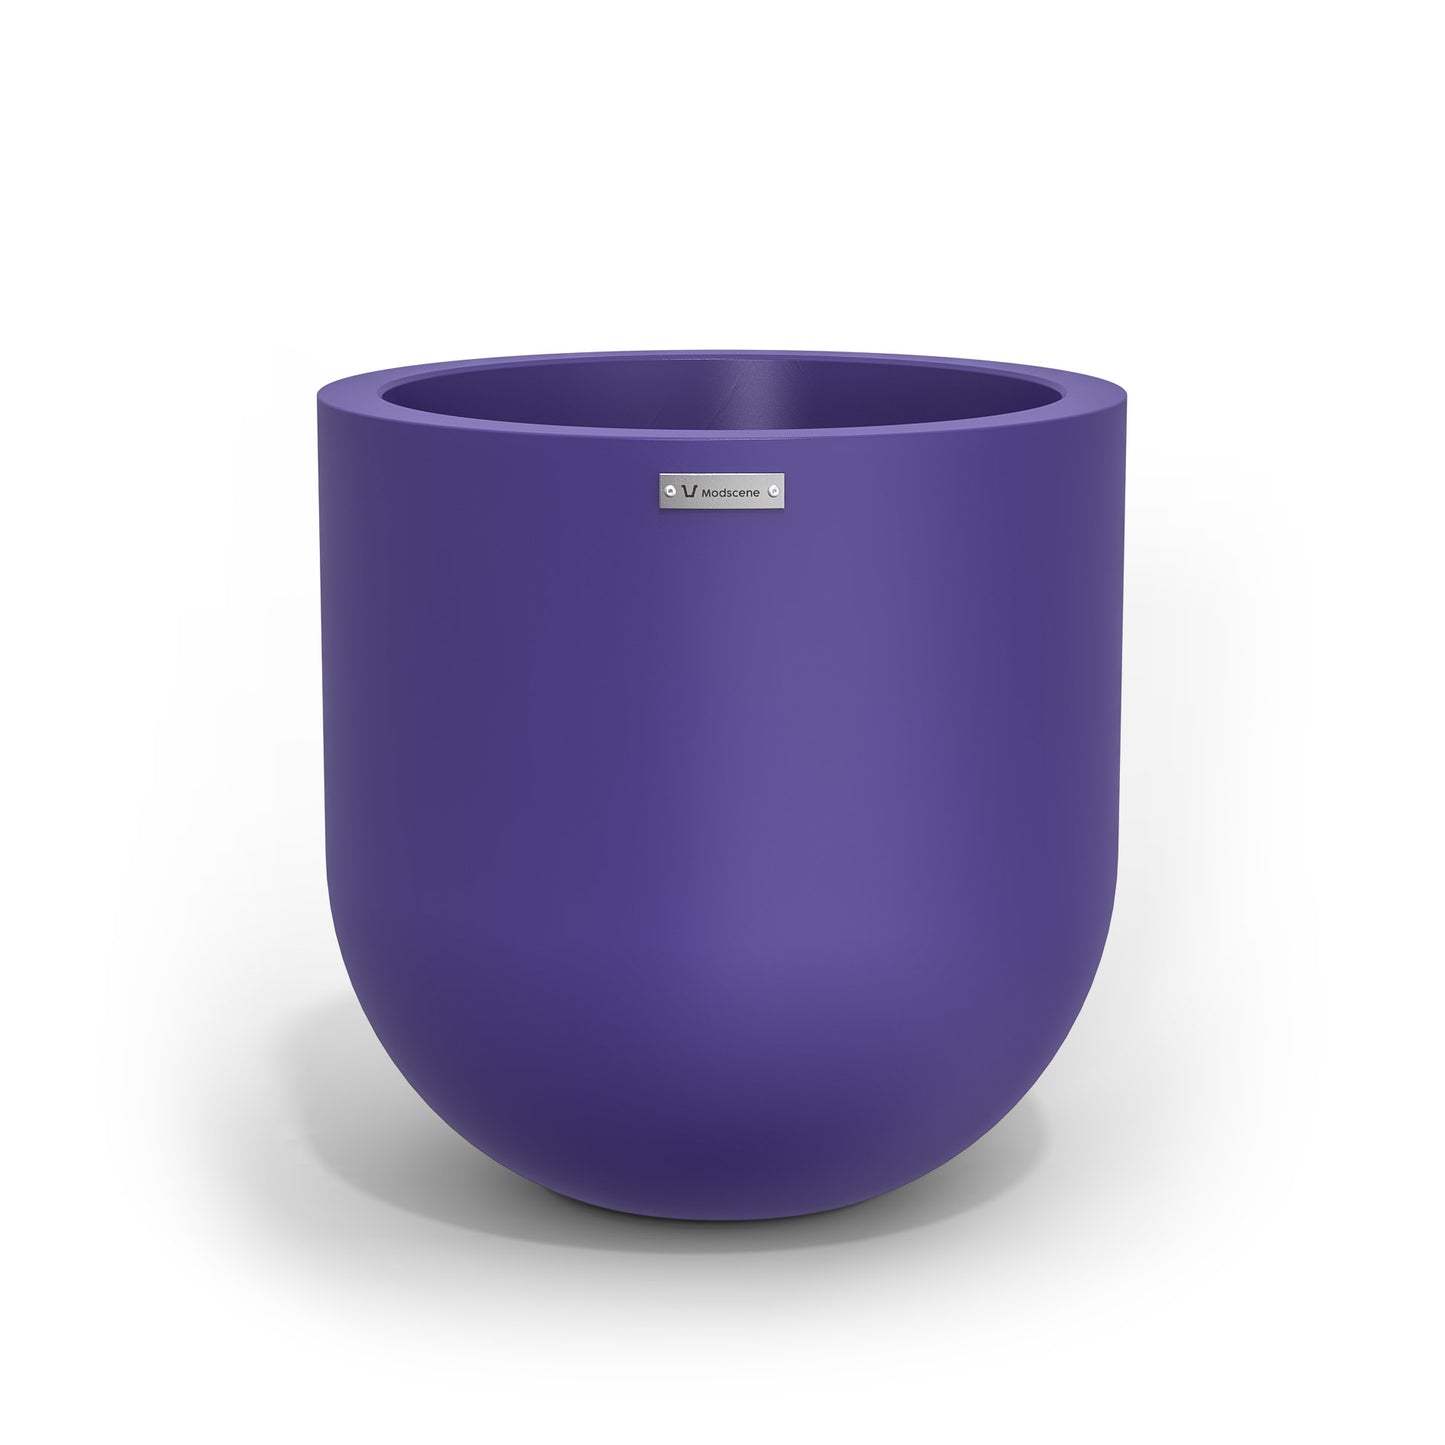 Medium Modscene planter pot in a purple colour. Made in New Zealand